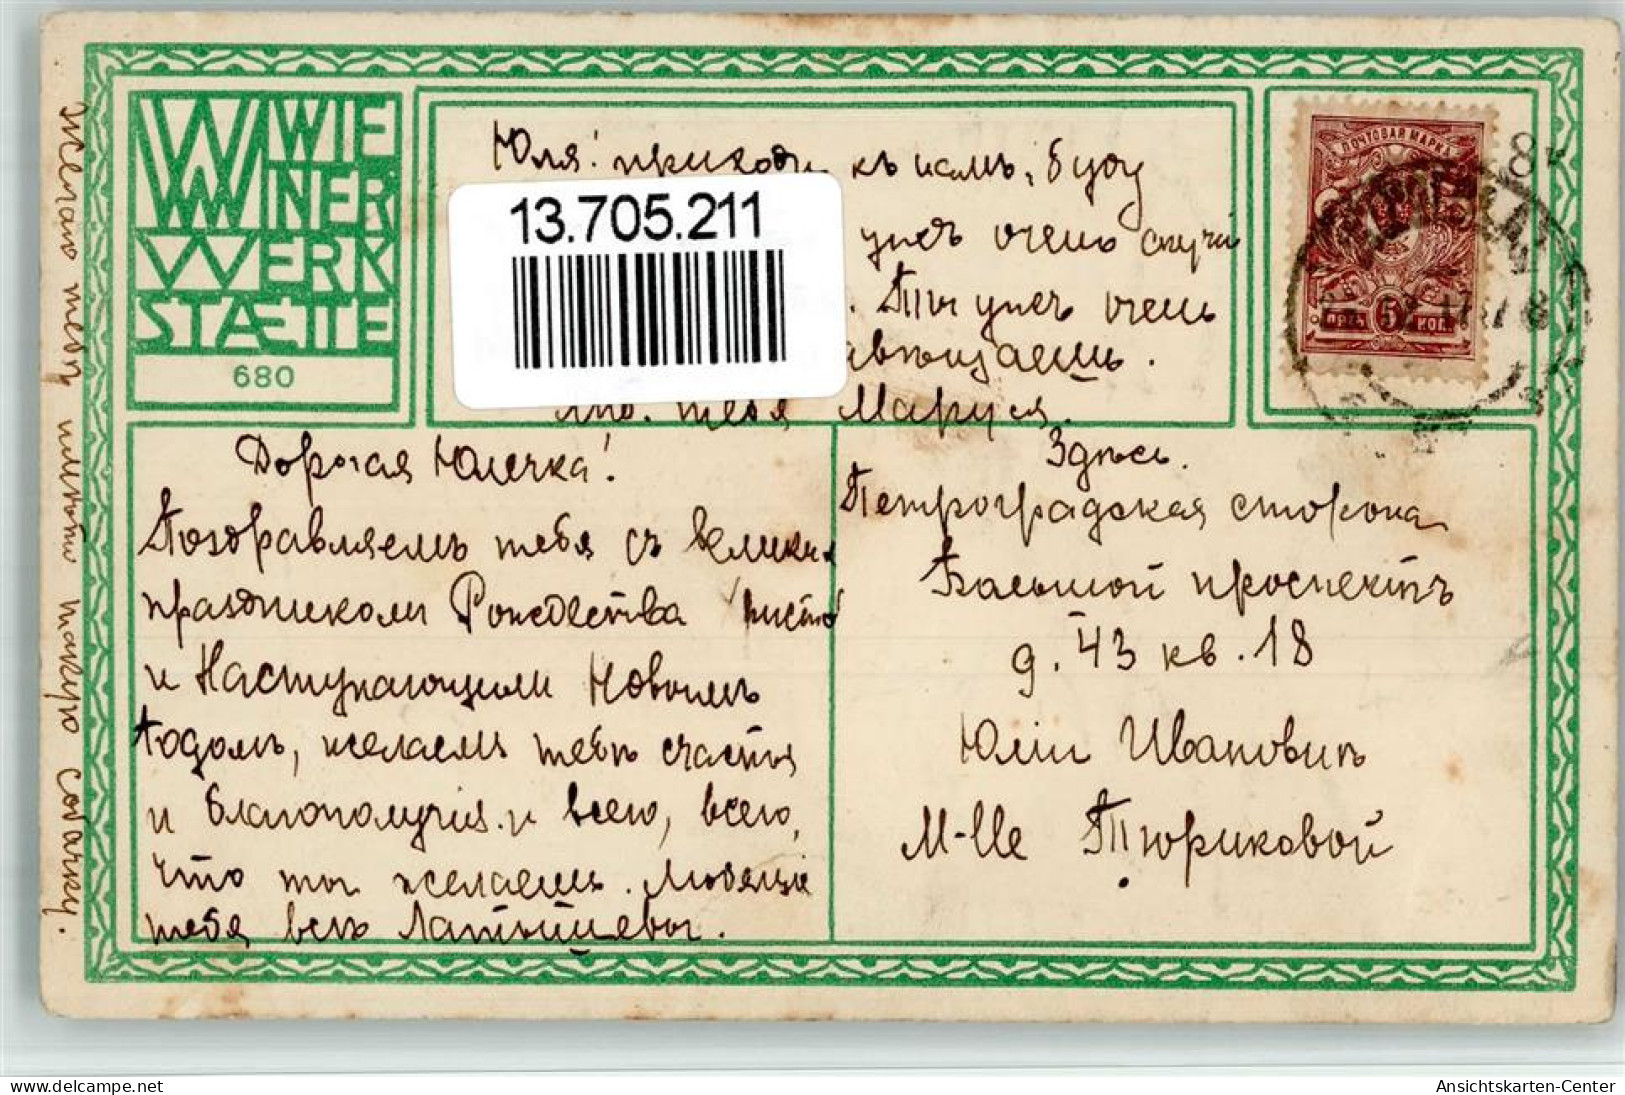 13705211 - WW 680 Jung Moritz Hund - Wiener Werkstätten